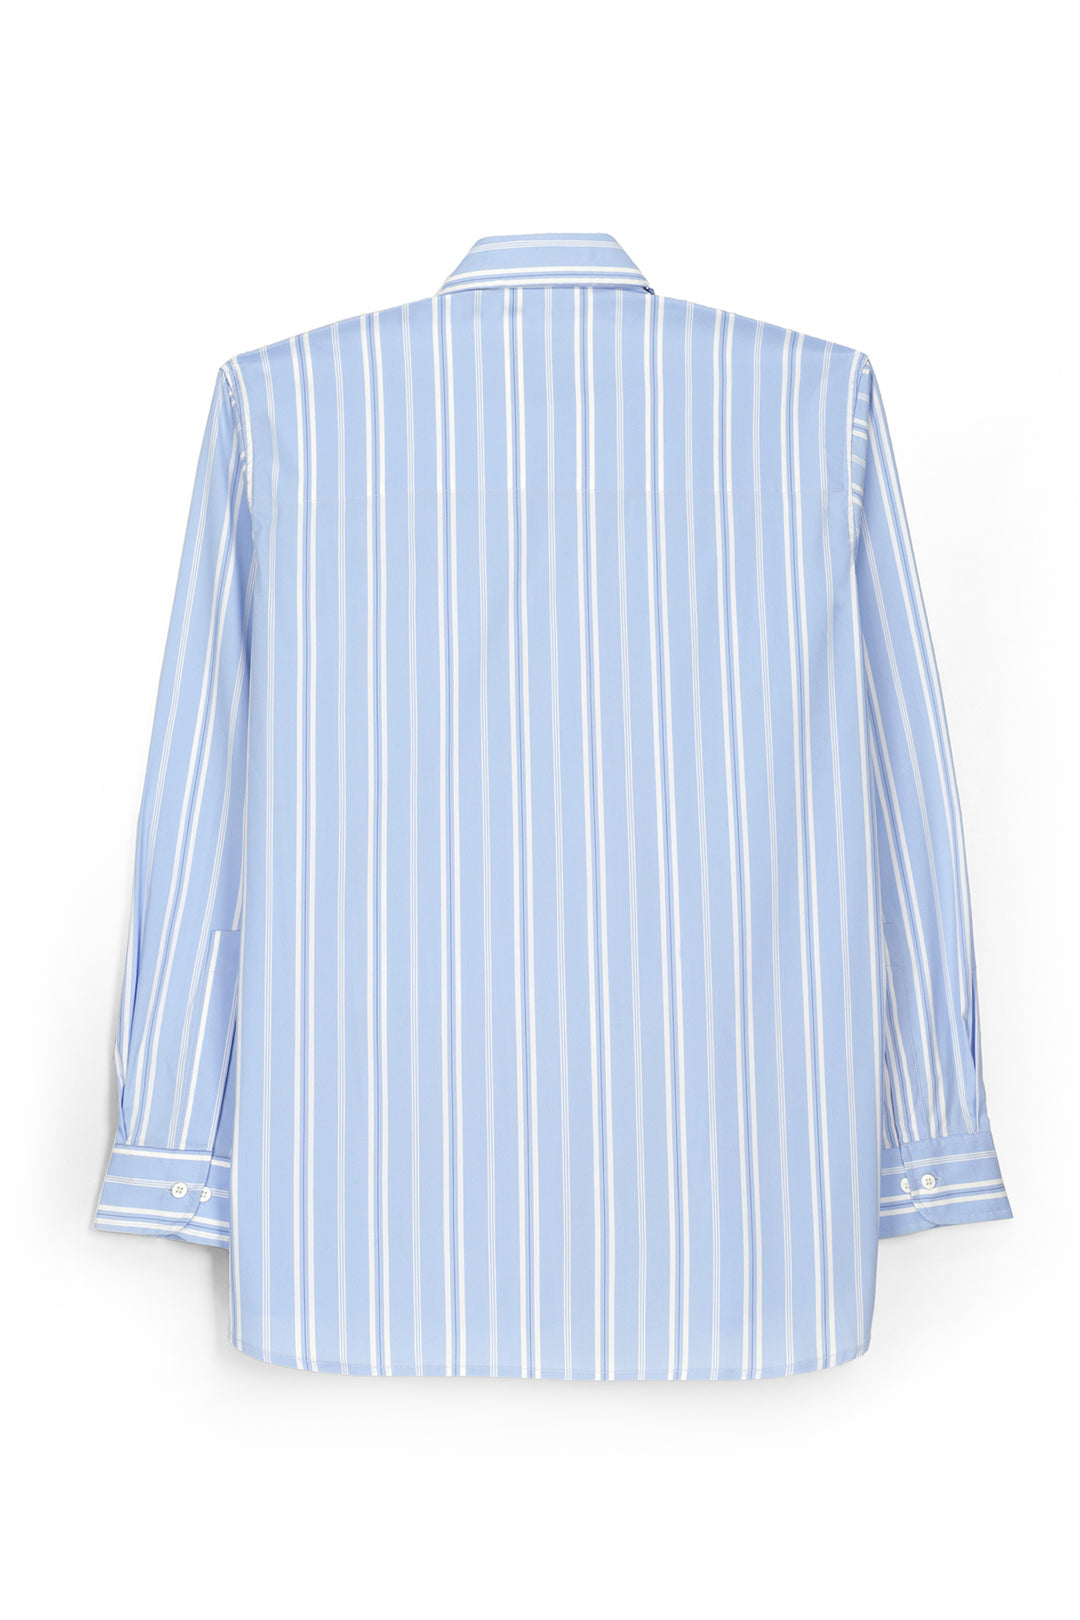 Basic Sky Blue Striped Shirt - S22 - MS0051R